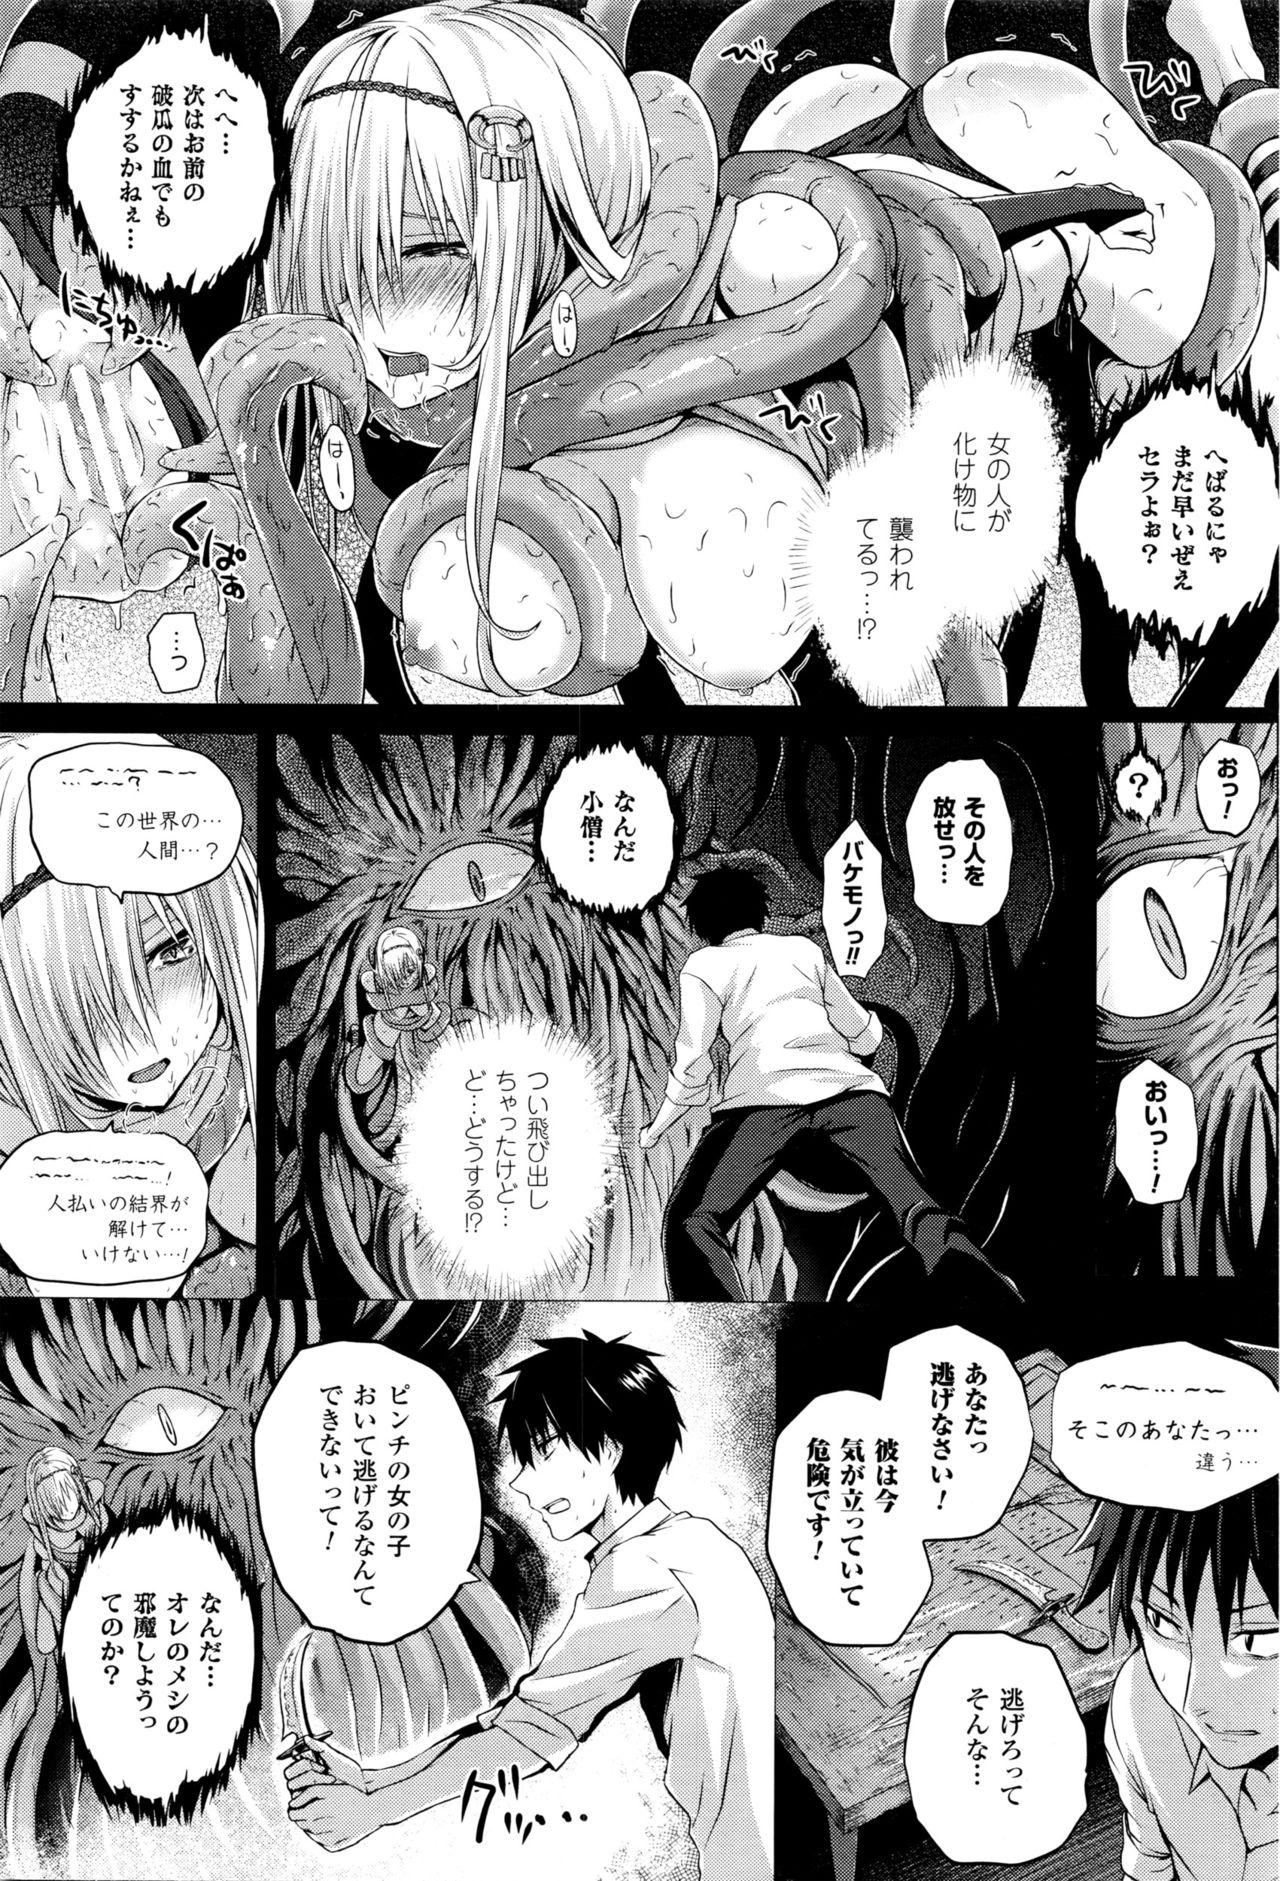 Bribe Isekai no Mahoutsukai Beurette - Page 4